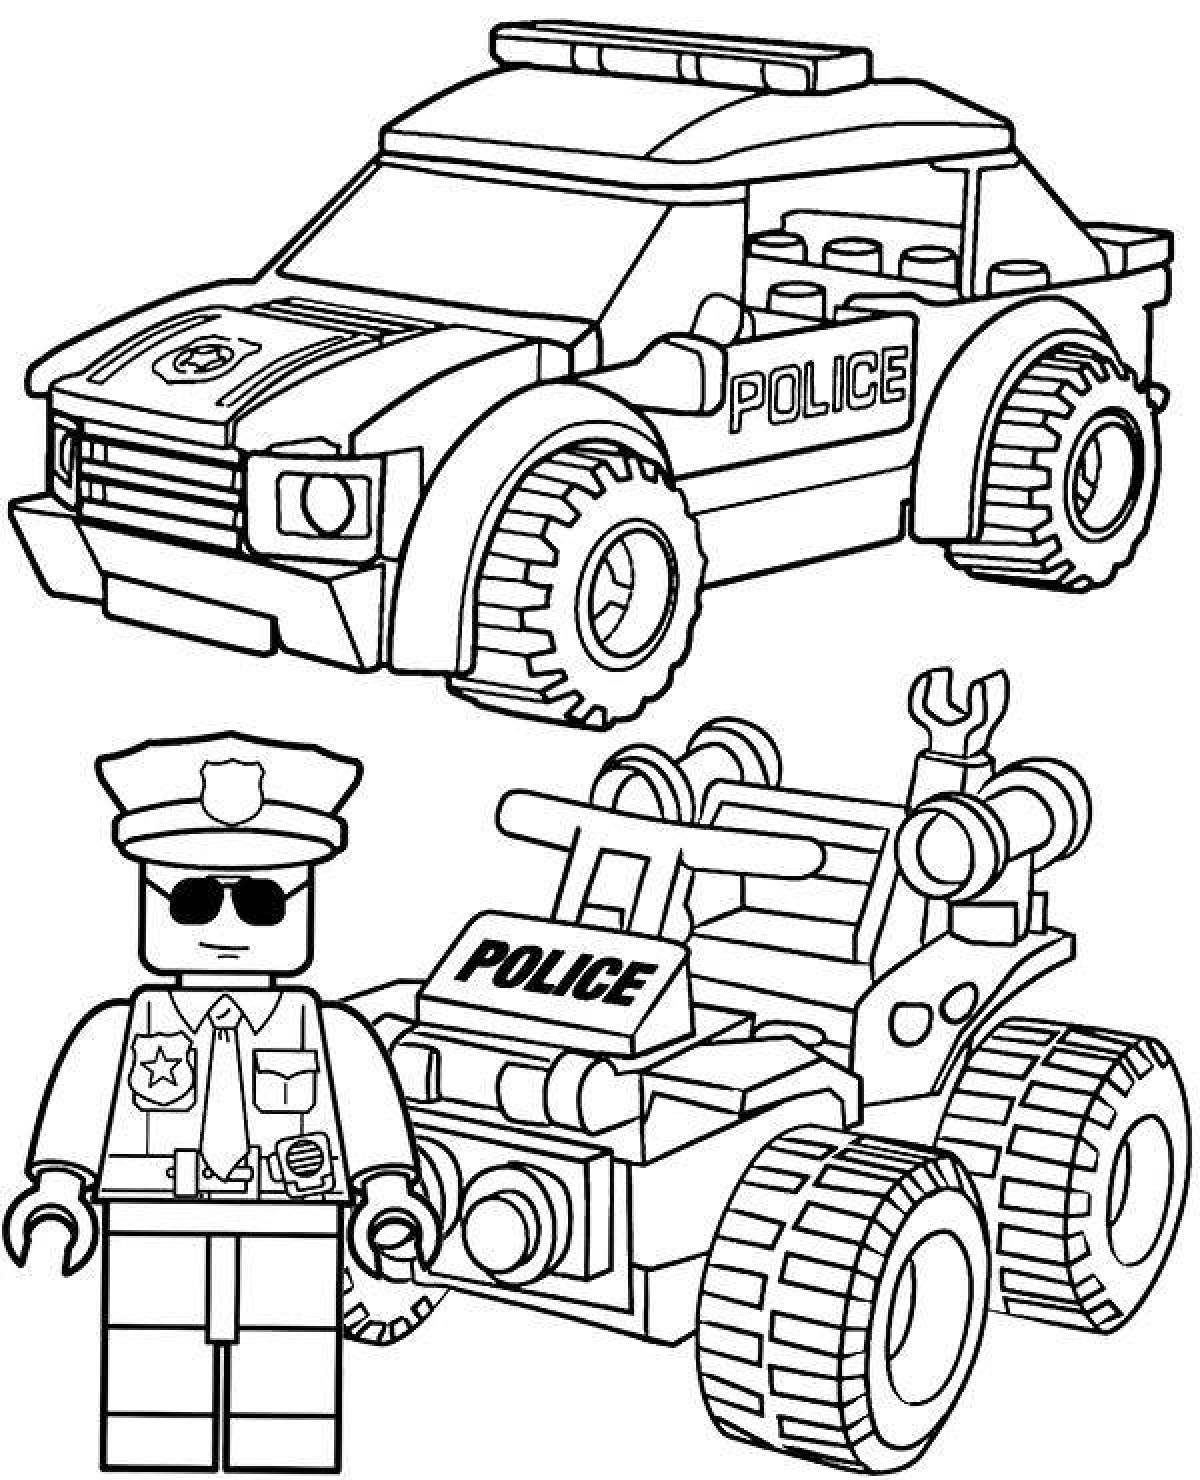 Lego police #7